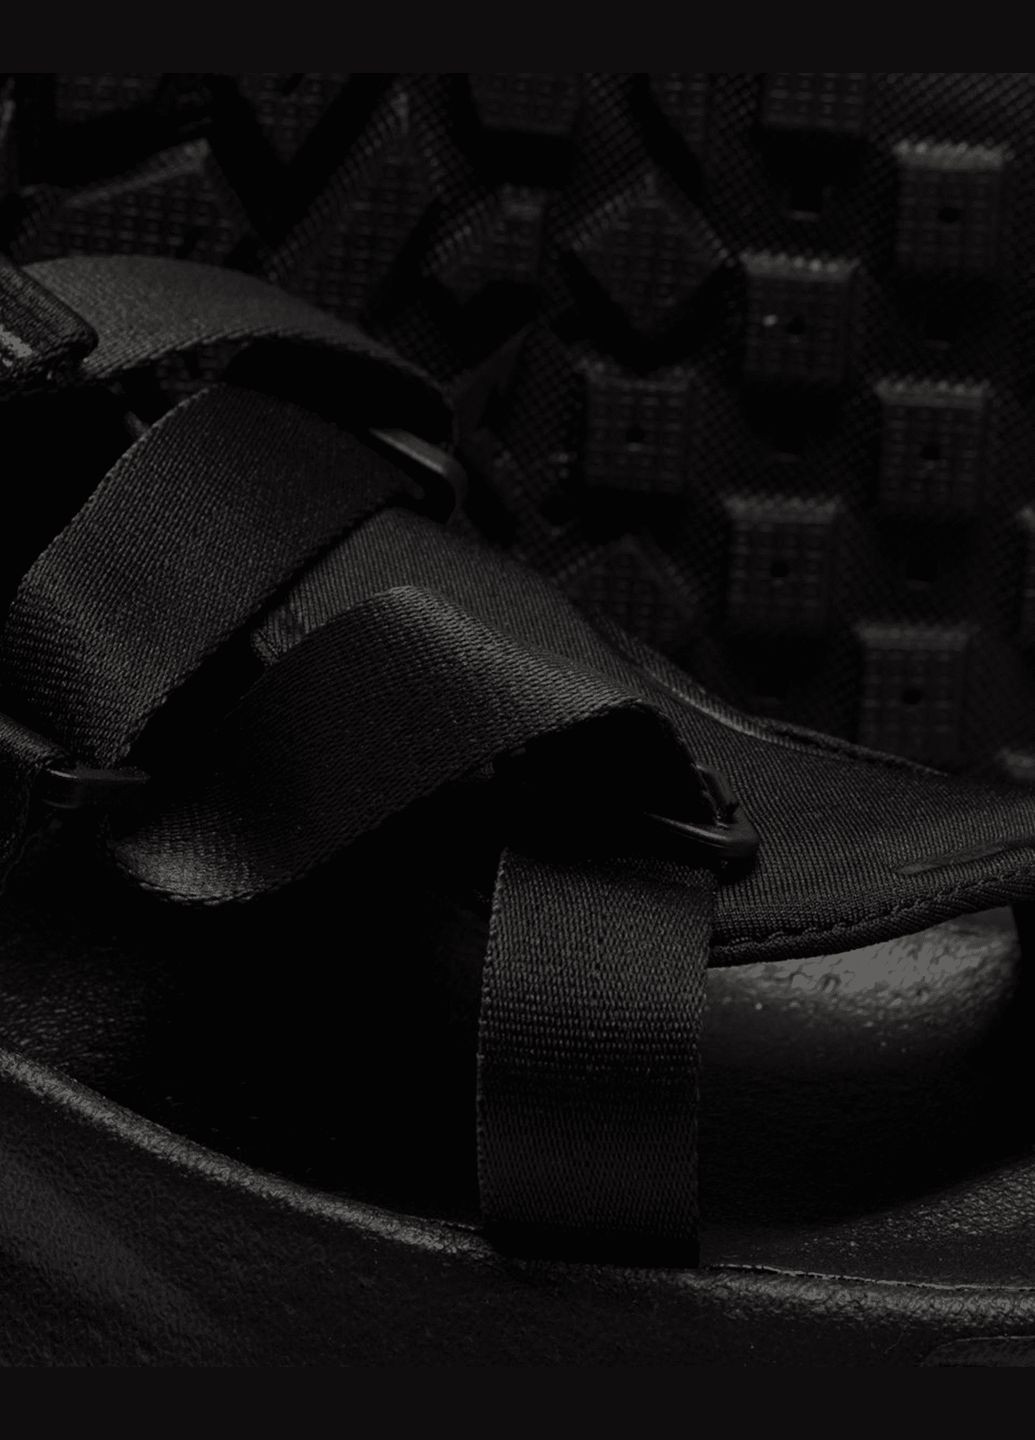 сандалии мужские oneonta nn sandal fb1948-001 весна-лето черные Nike